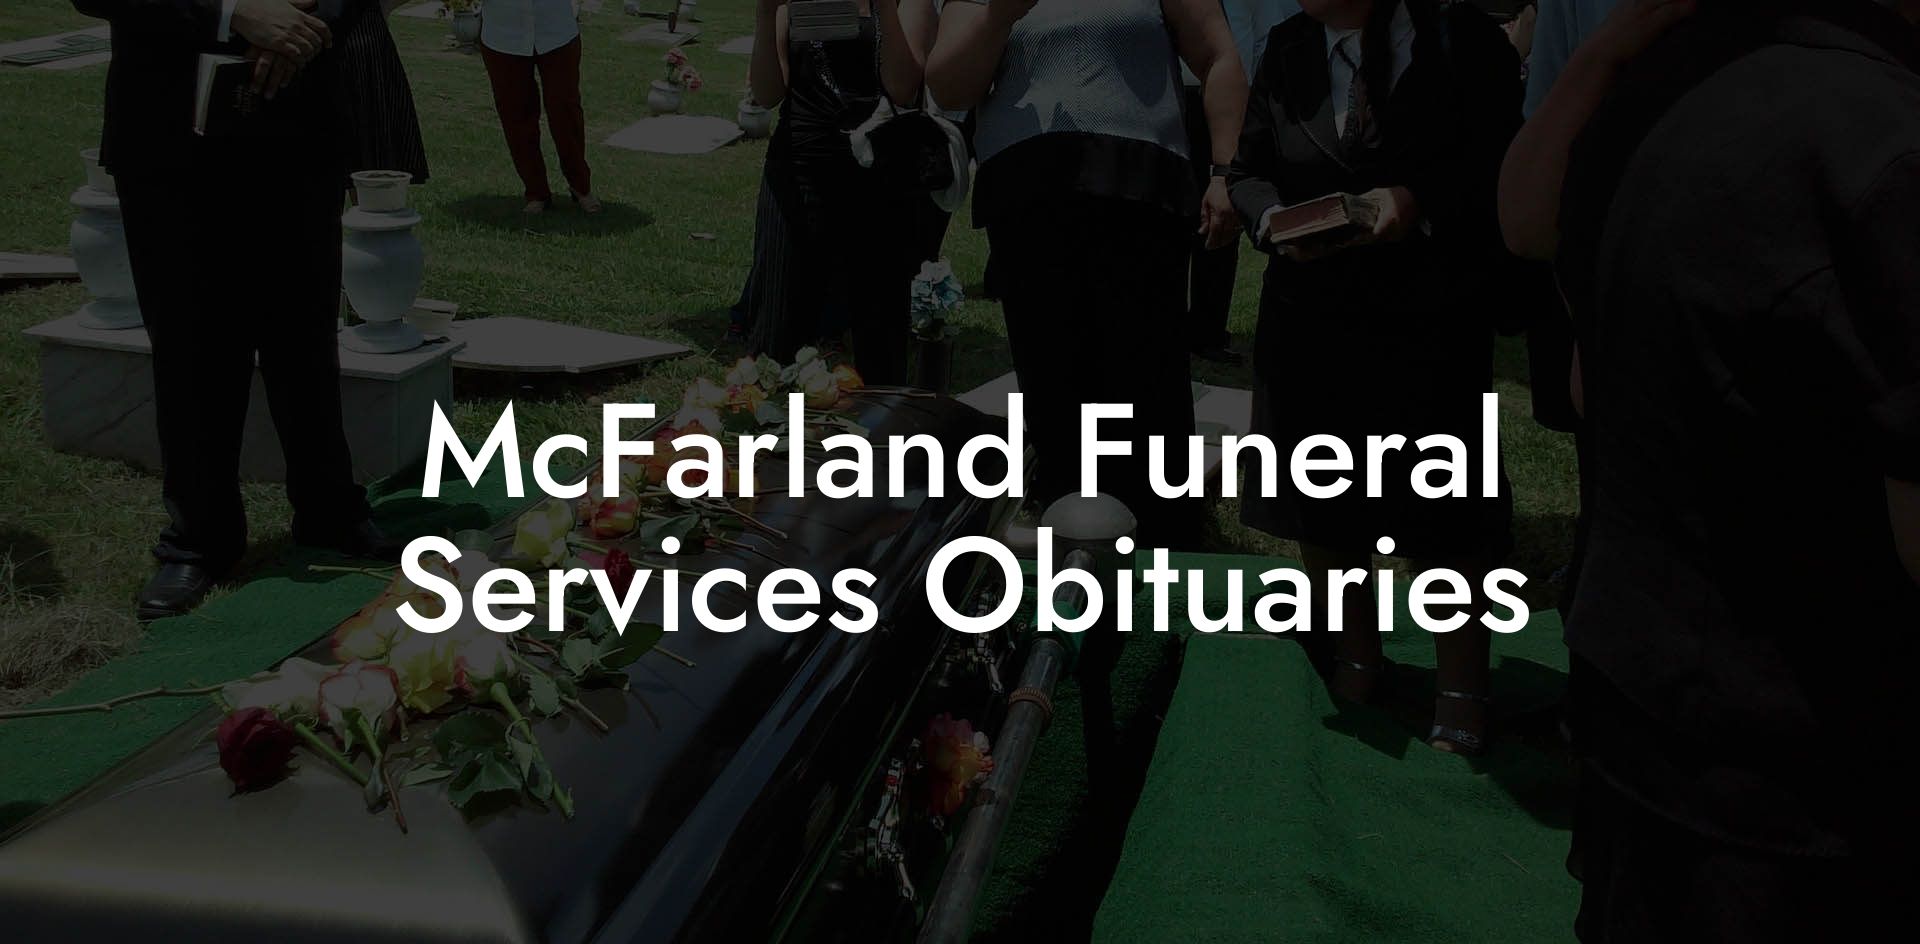 McFarland Funeral Services Obituaries